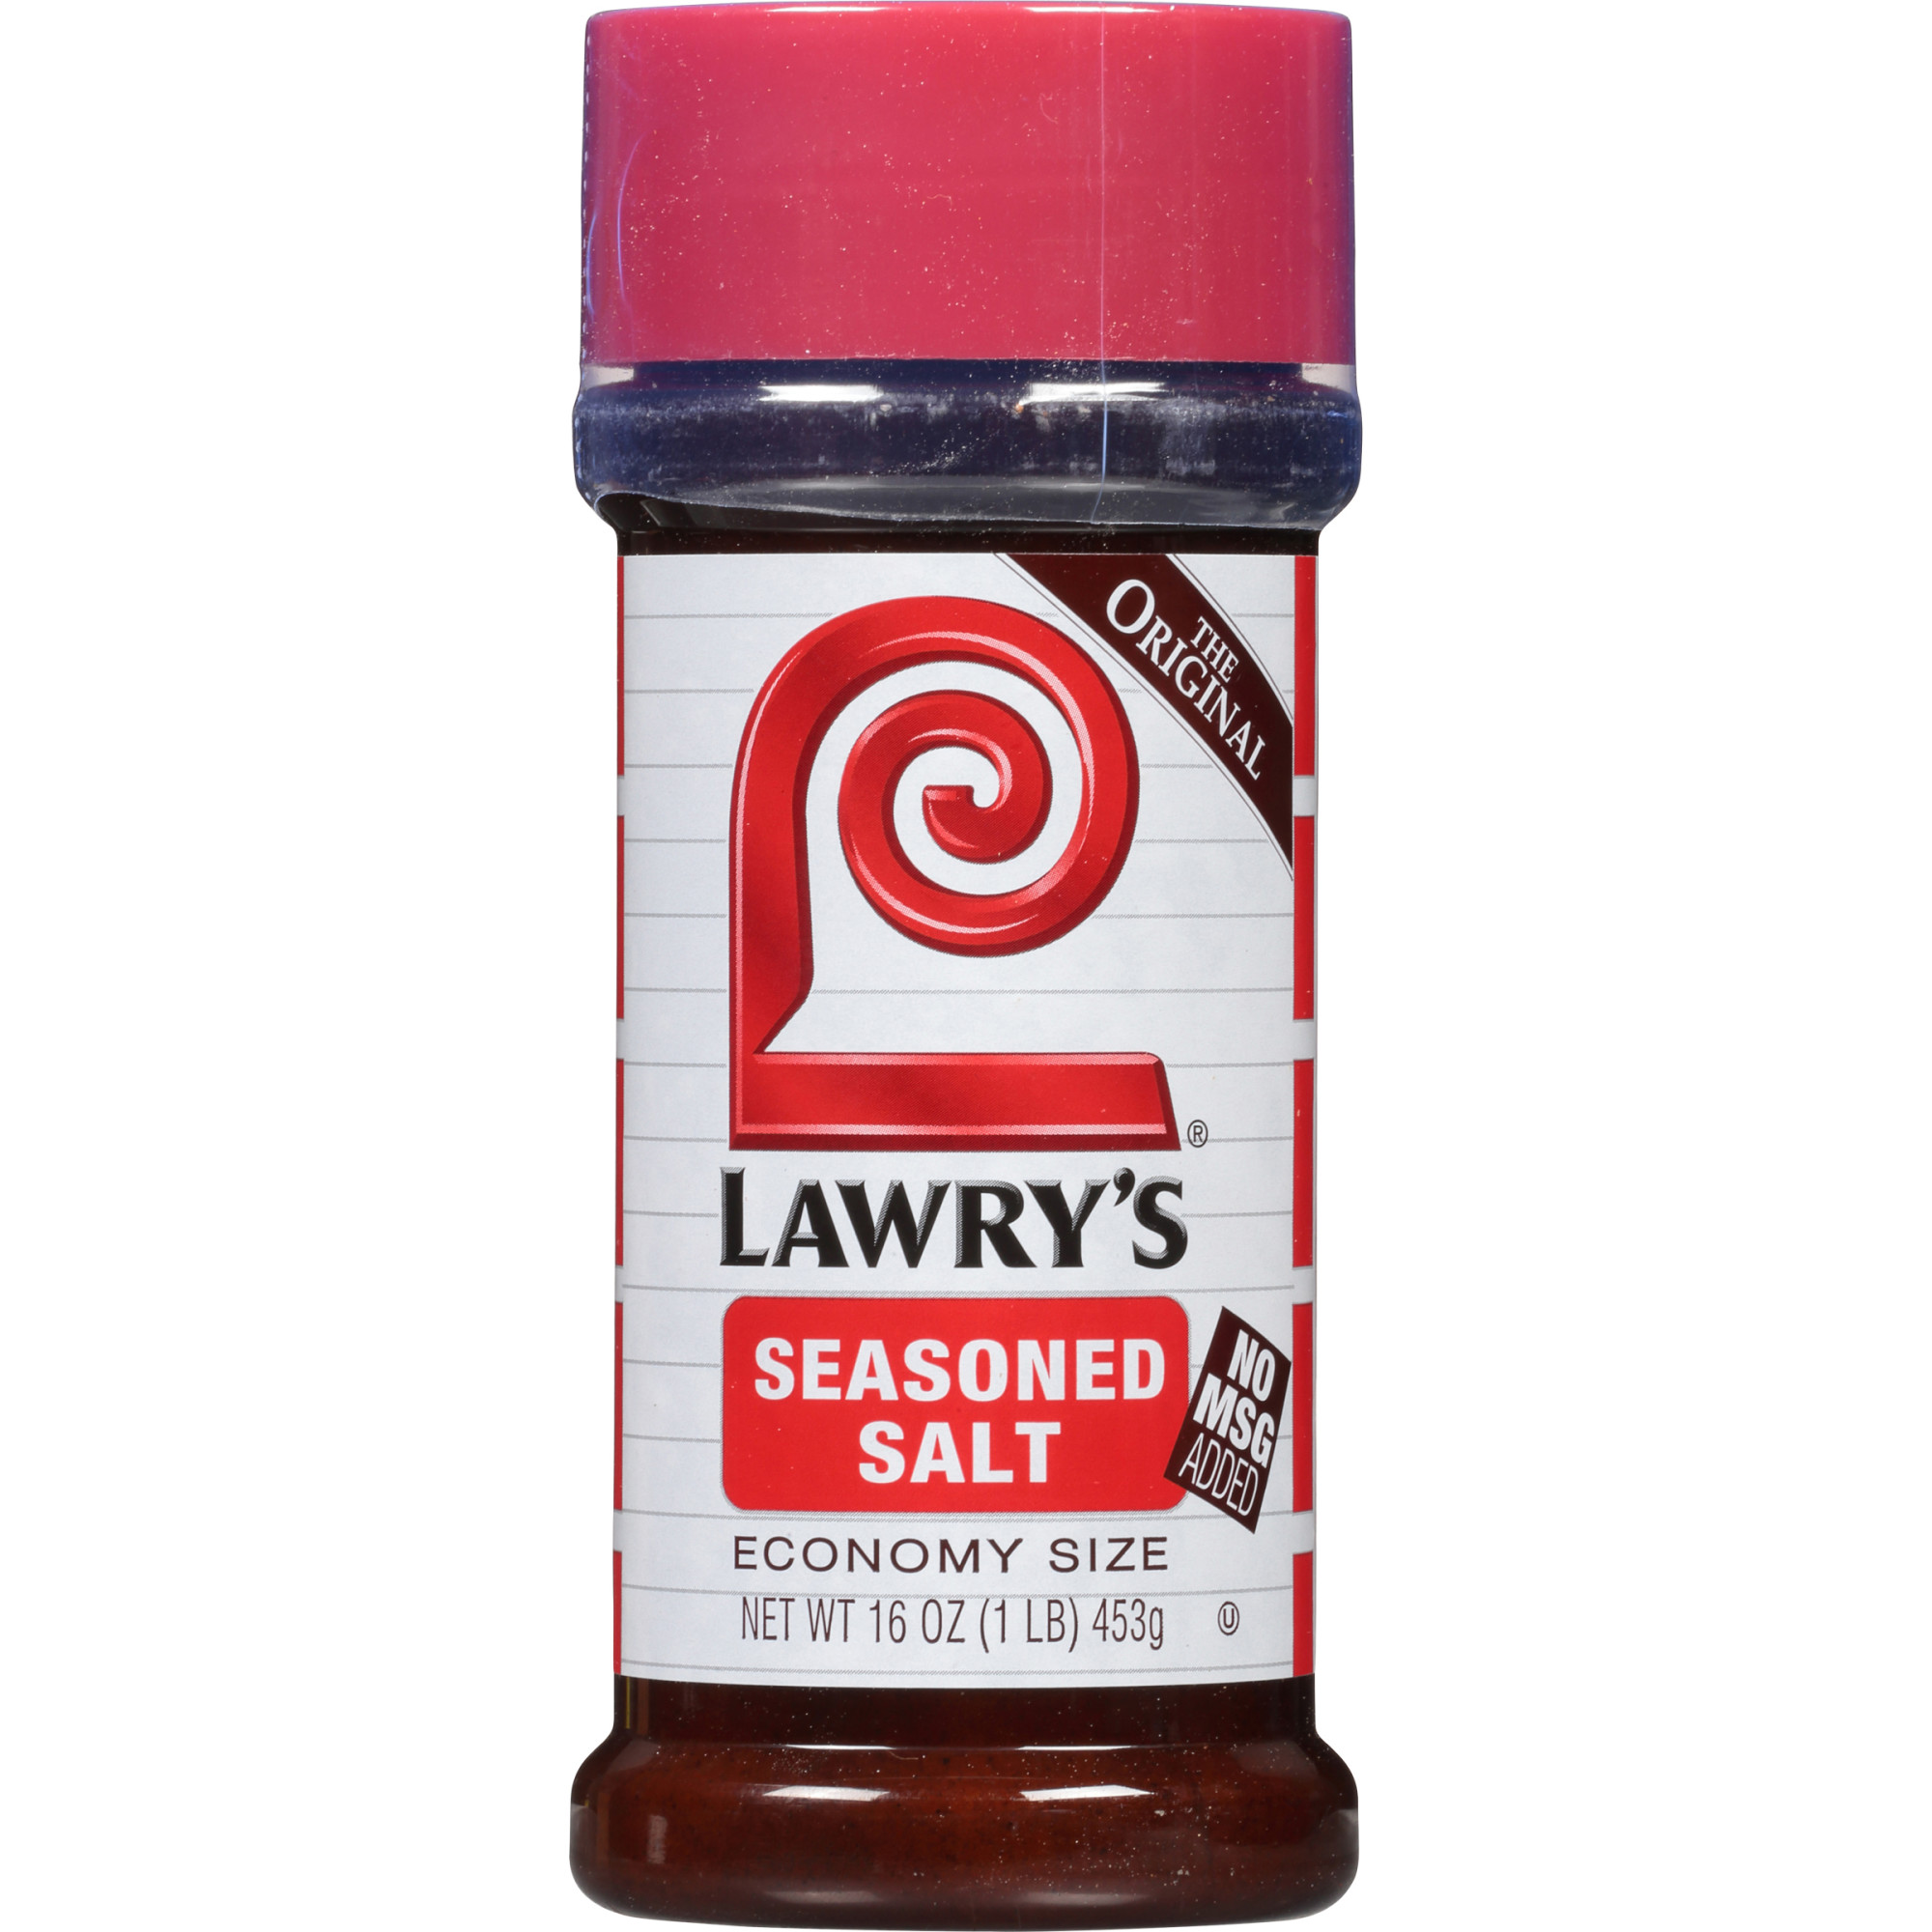 Lawry's Economy Size Seasoned Salt, 16 oz Mixed Spices & Seasonings - image 1 of 12